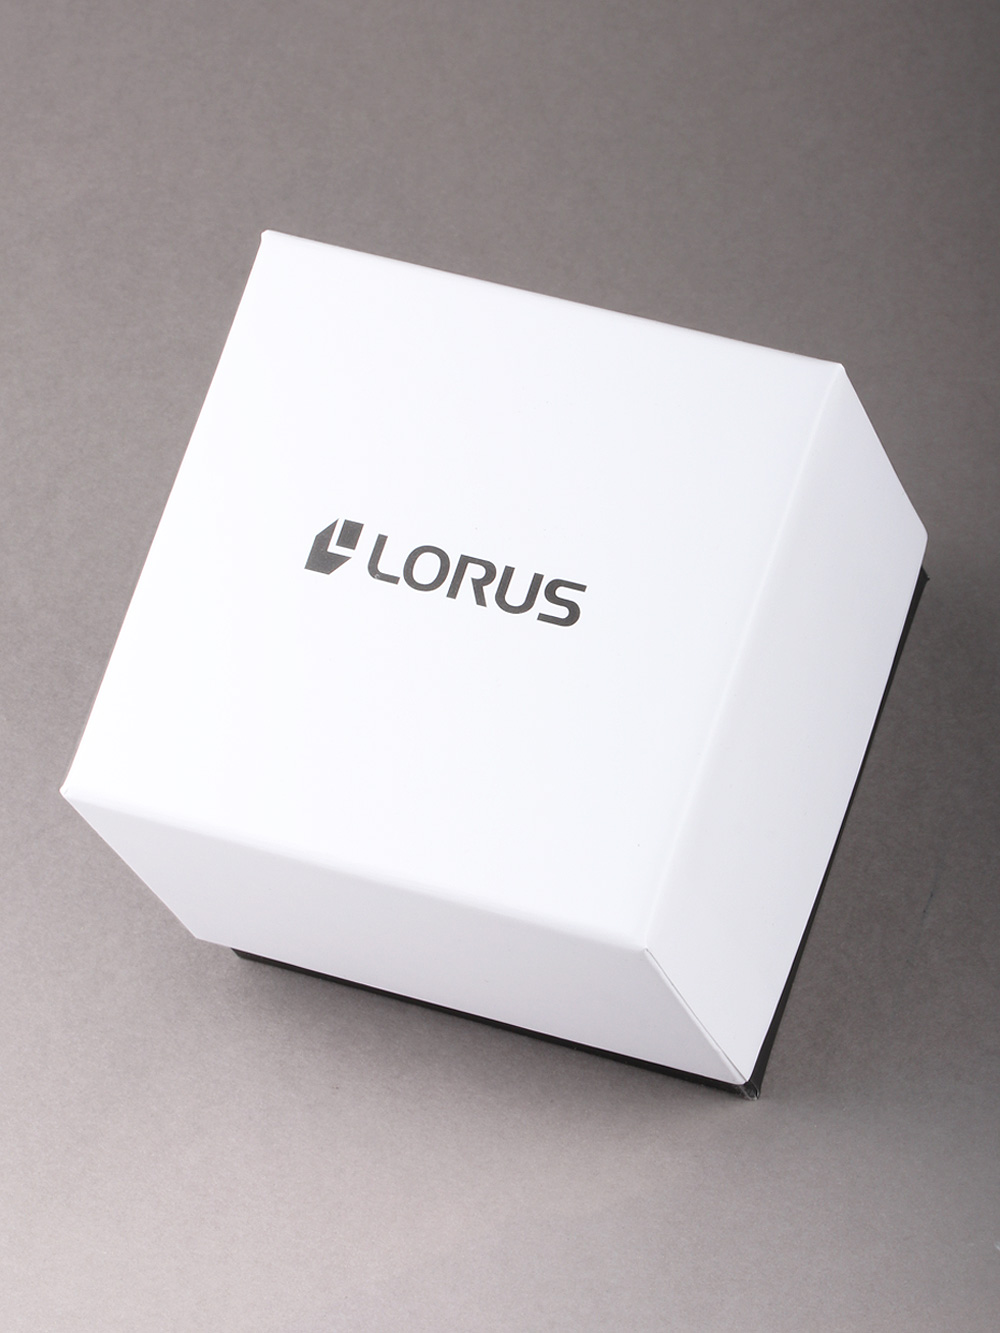 Lorus RH913PX9